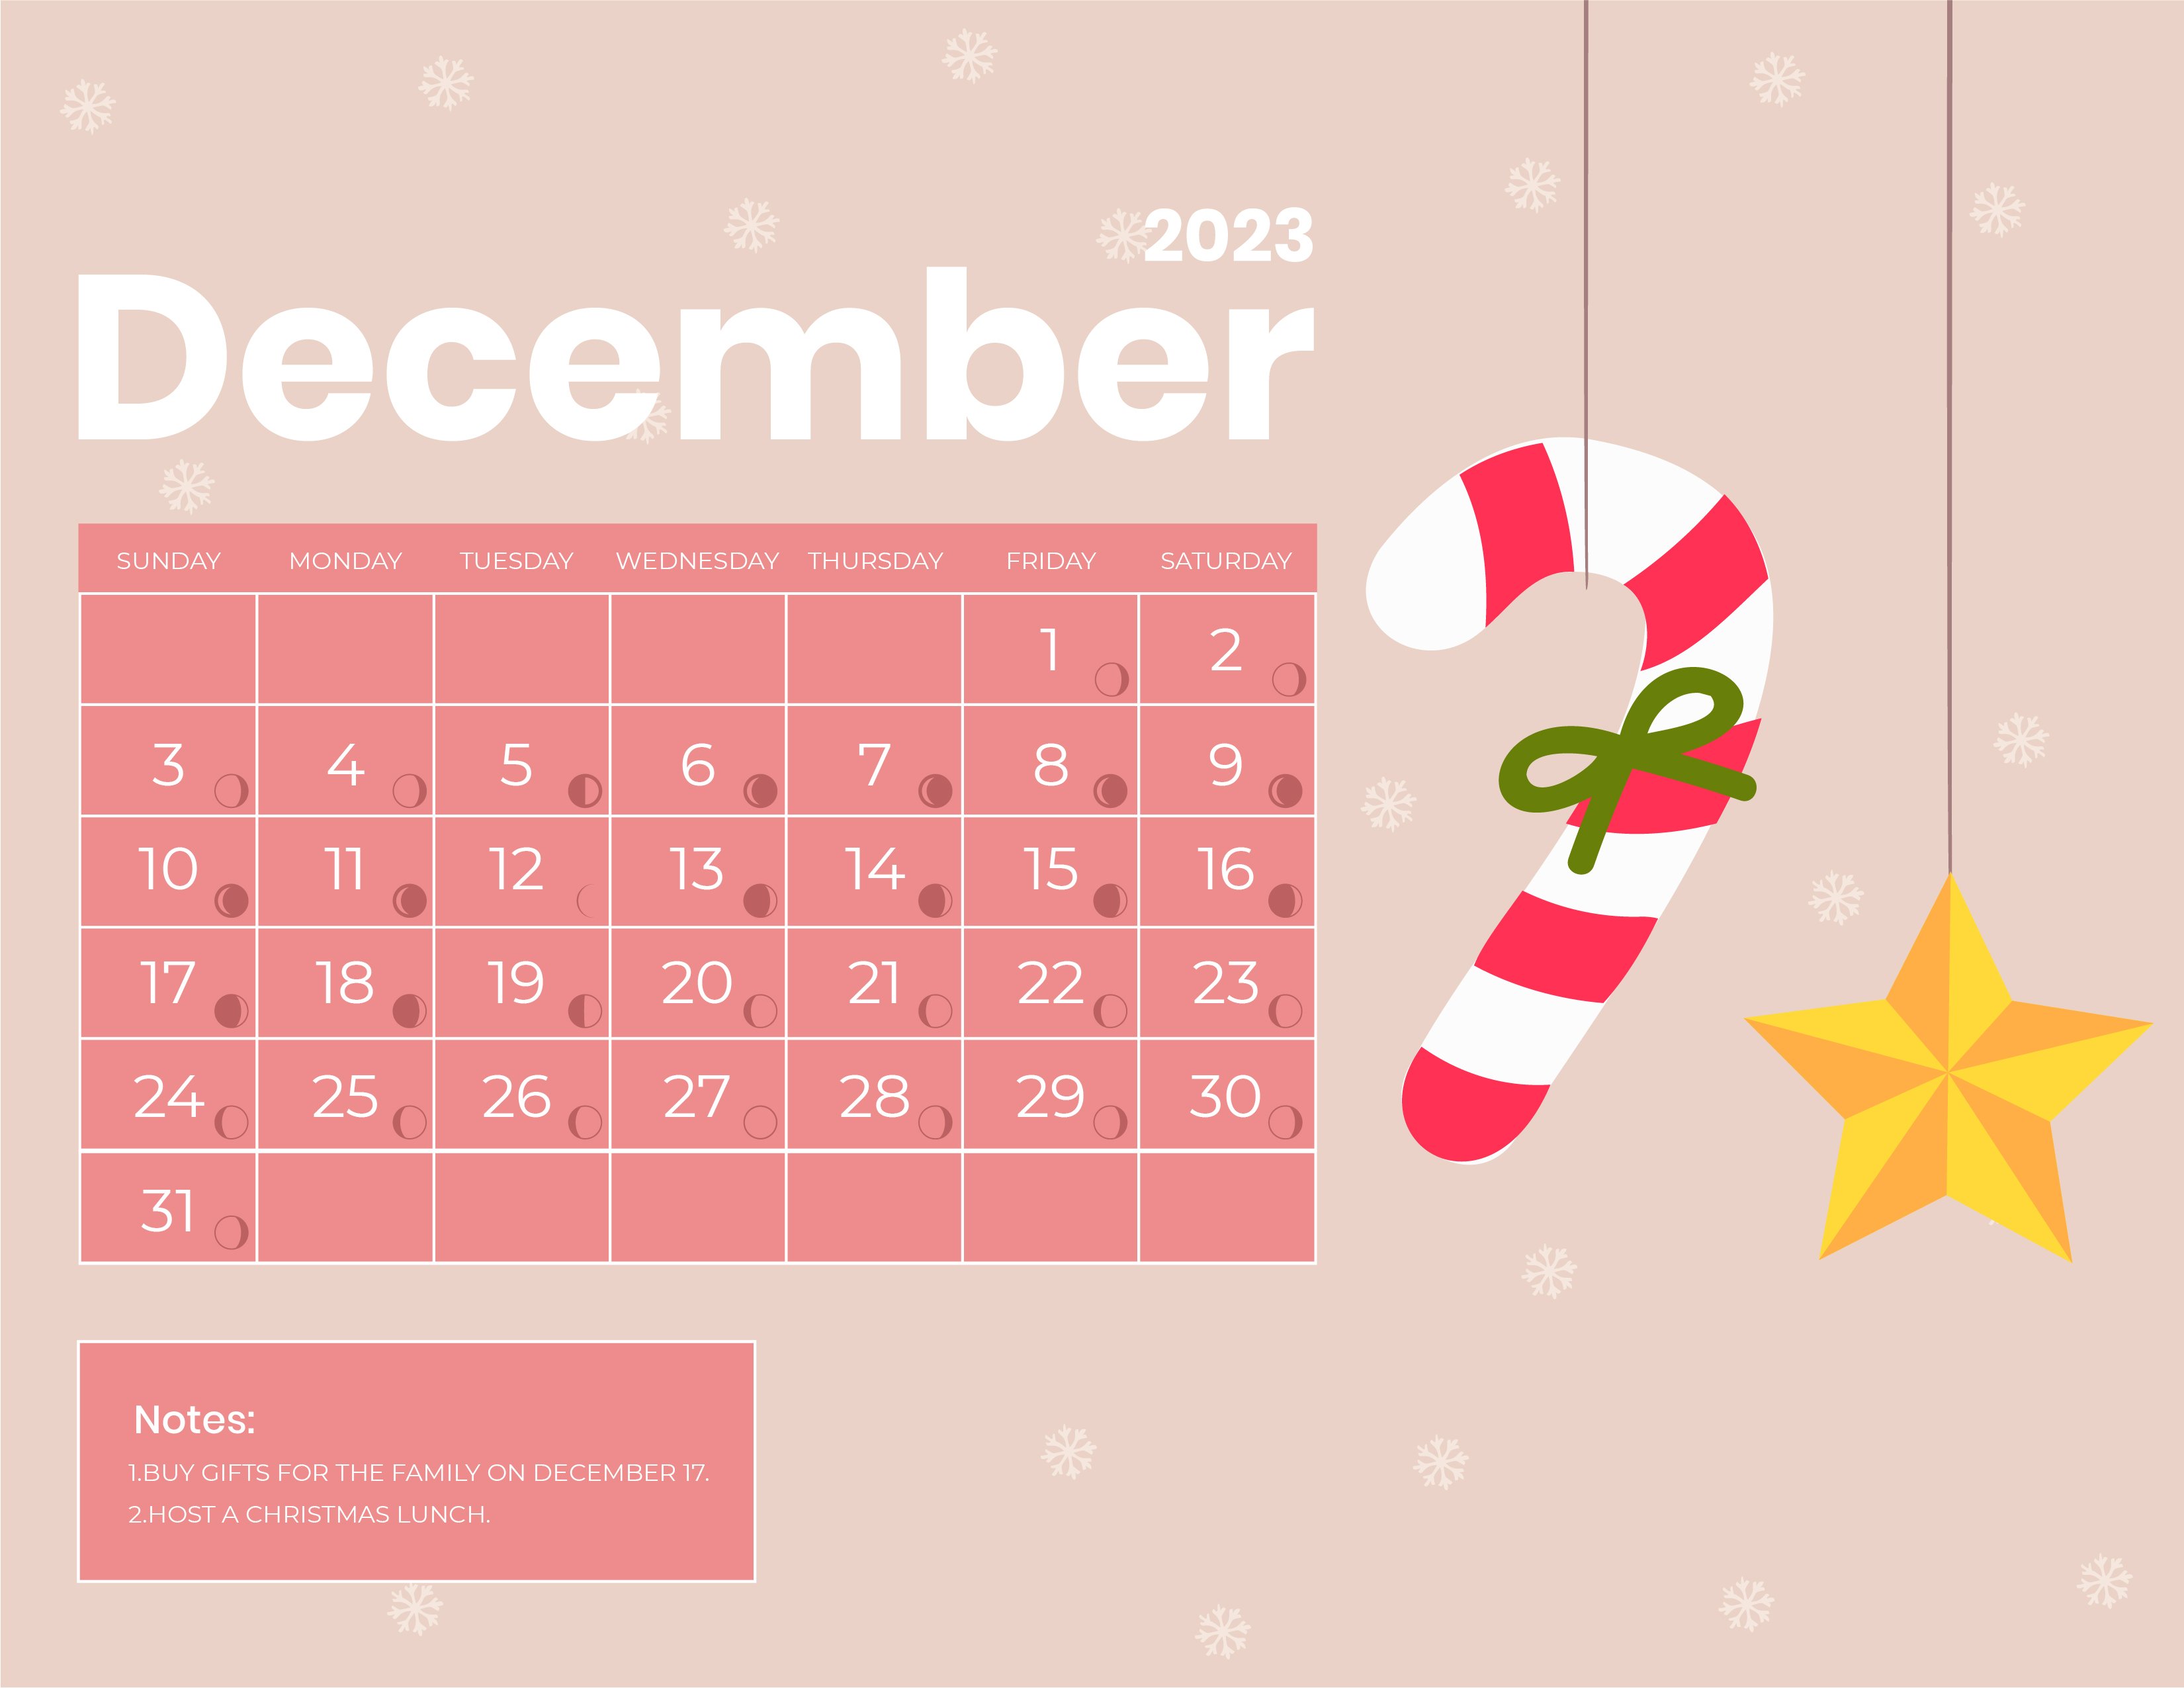 December 2023 Calendar With Moon Phases in Word, Google Docs, Illustrator, EPS, SVG, JPG